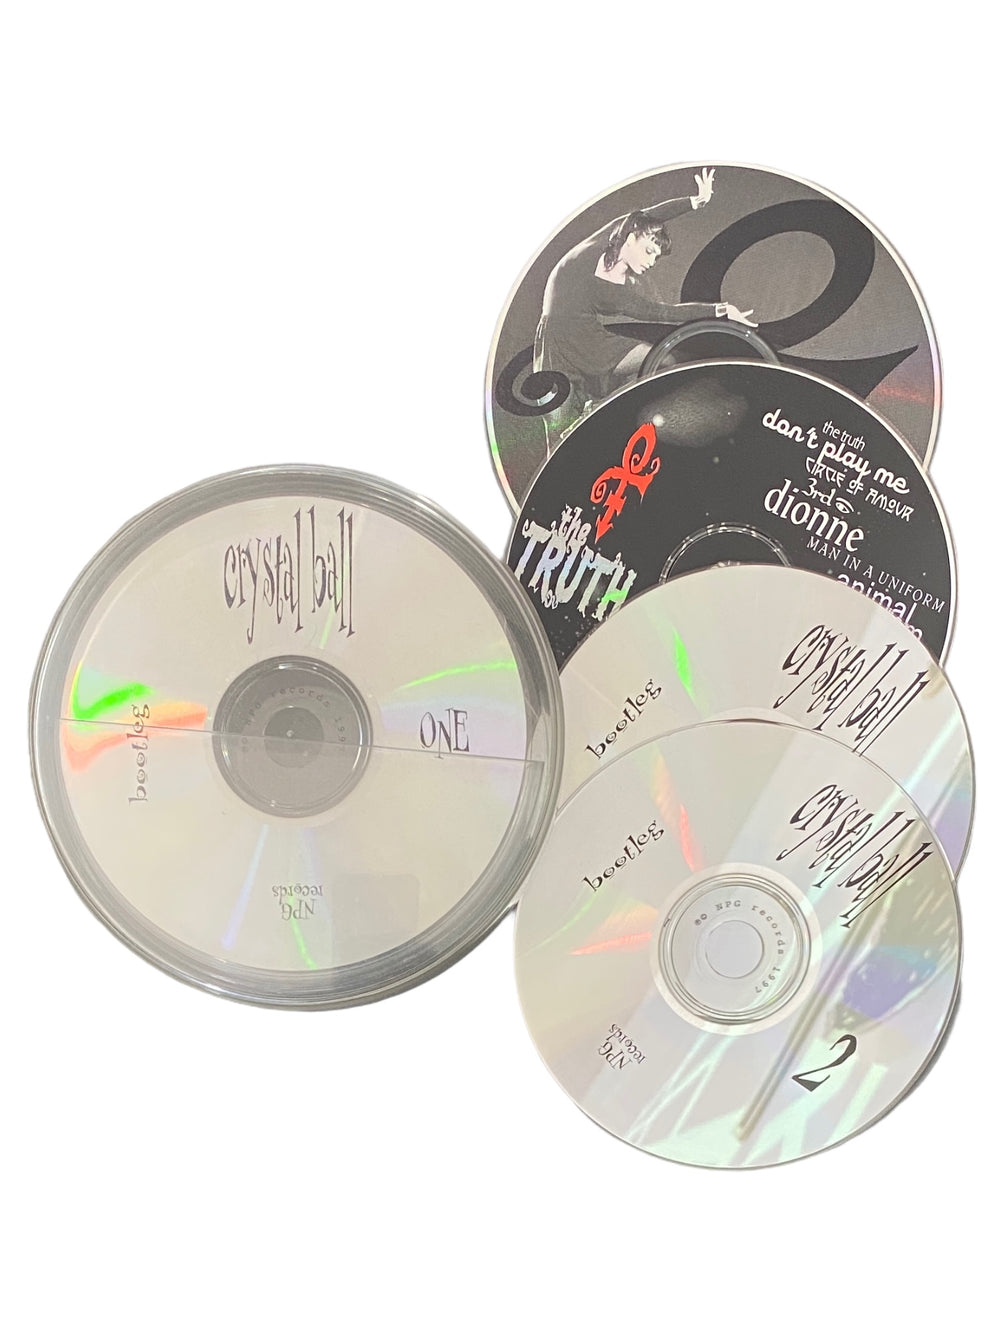 Prince – 0(+> Crystal Ball 5 Disc Set CD Album Original 1997 NPG Records Via 1-800 New Funk